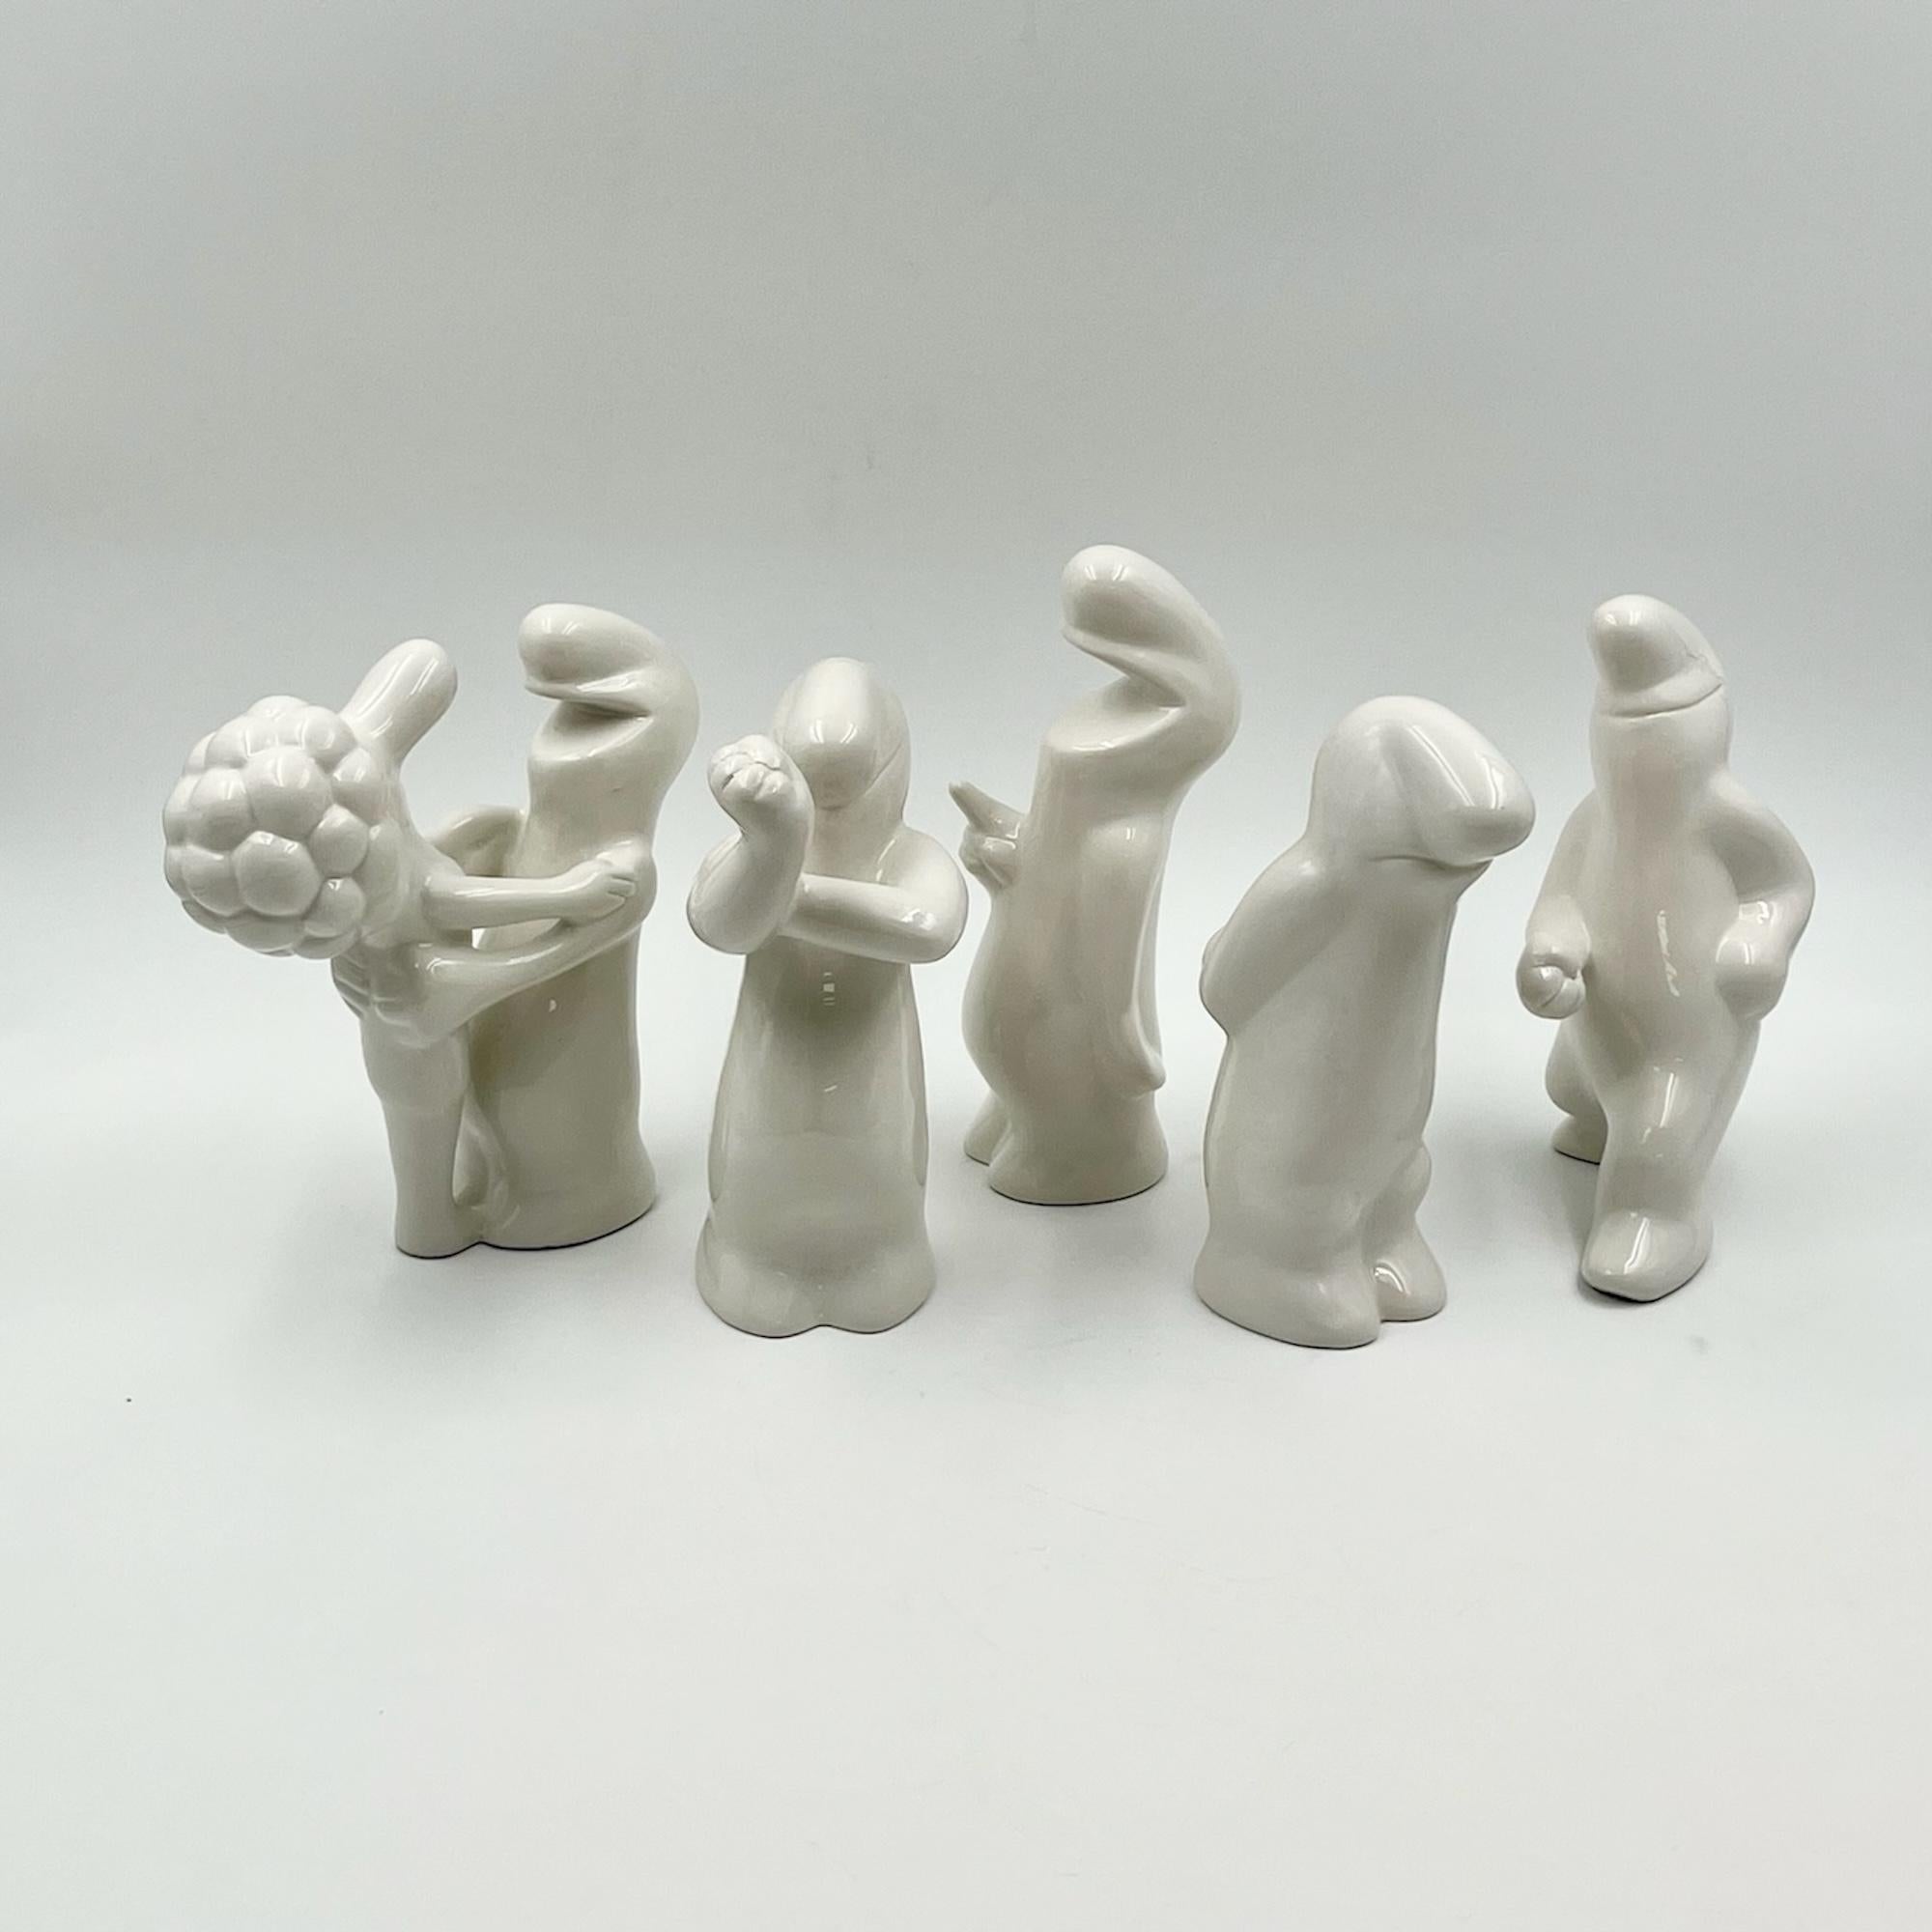 Ceramic Sculptures 'La Linea' by Osvaldo Cavandoli – Vintage Full Series 1960s In Good Condition For Sale In San Benedetto Del Tronto, IT